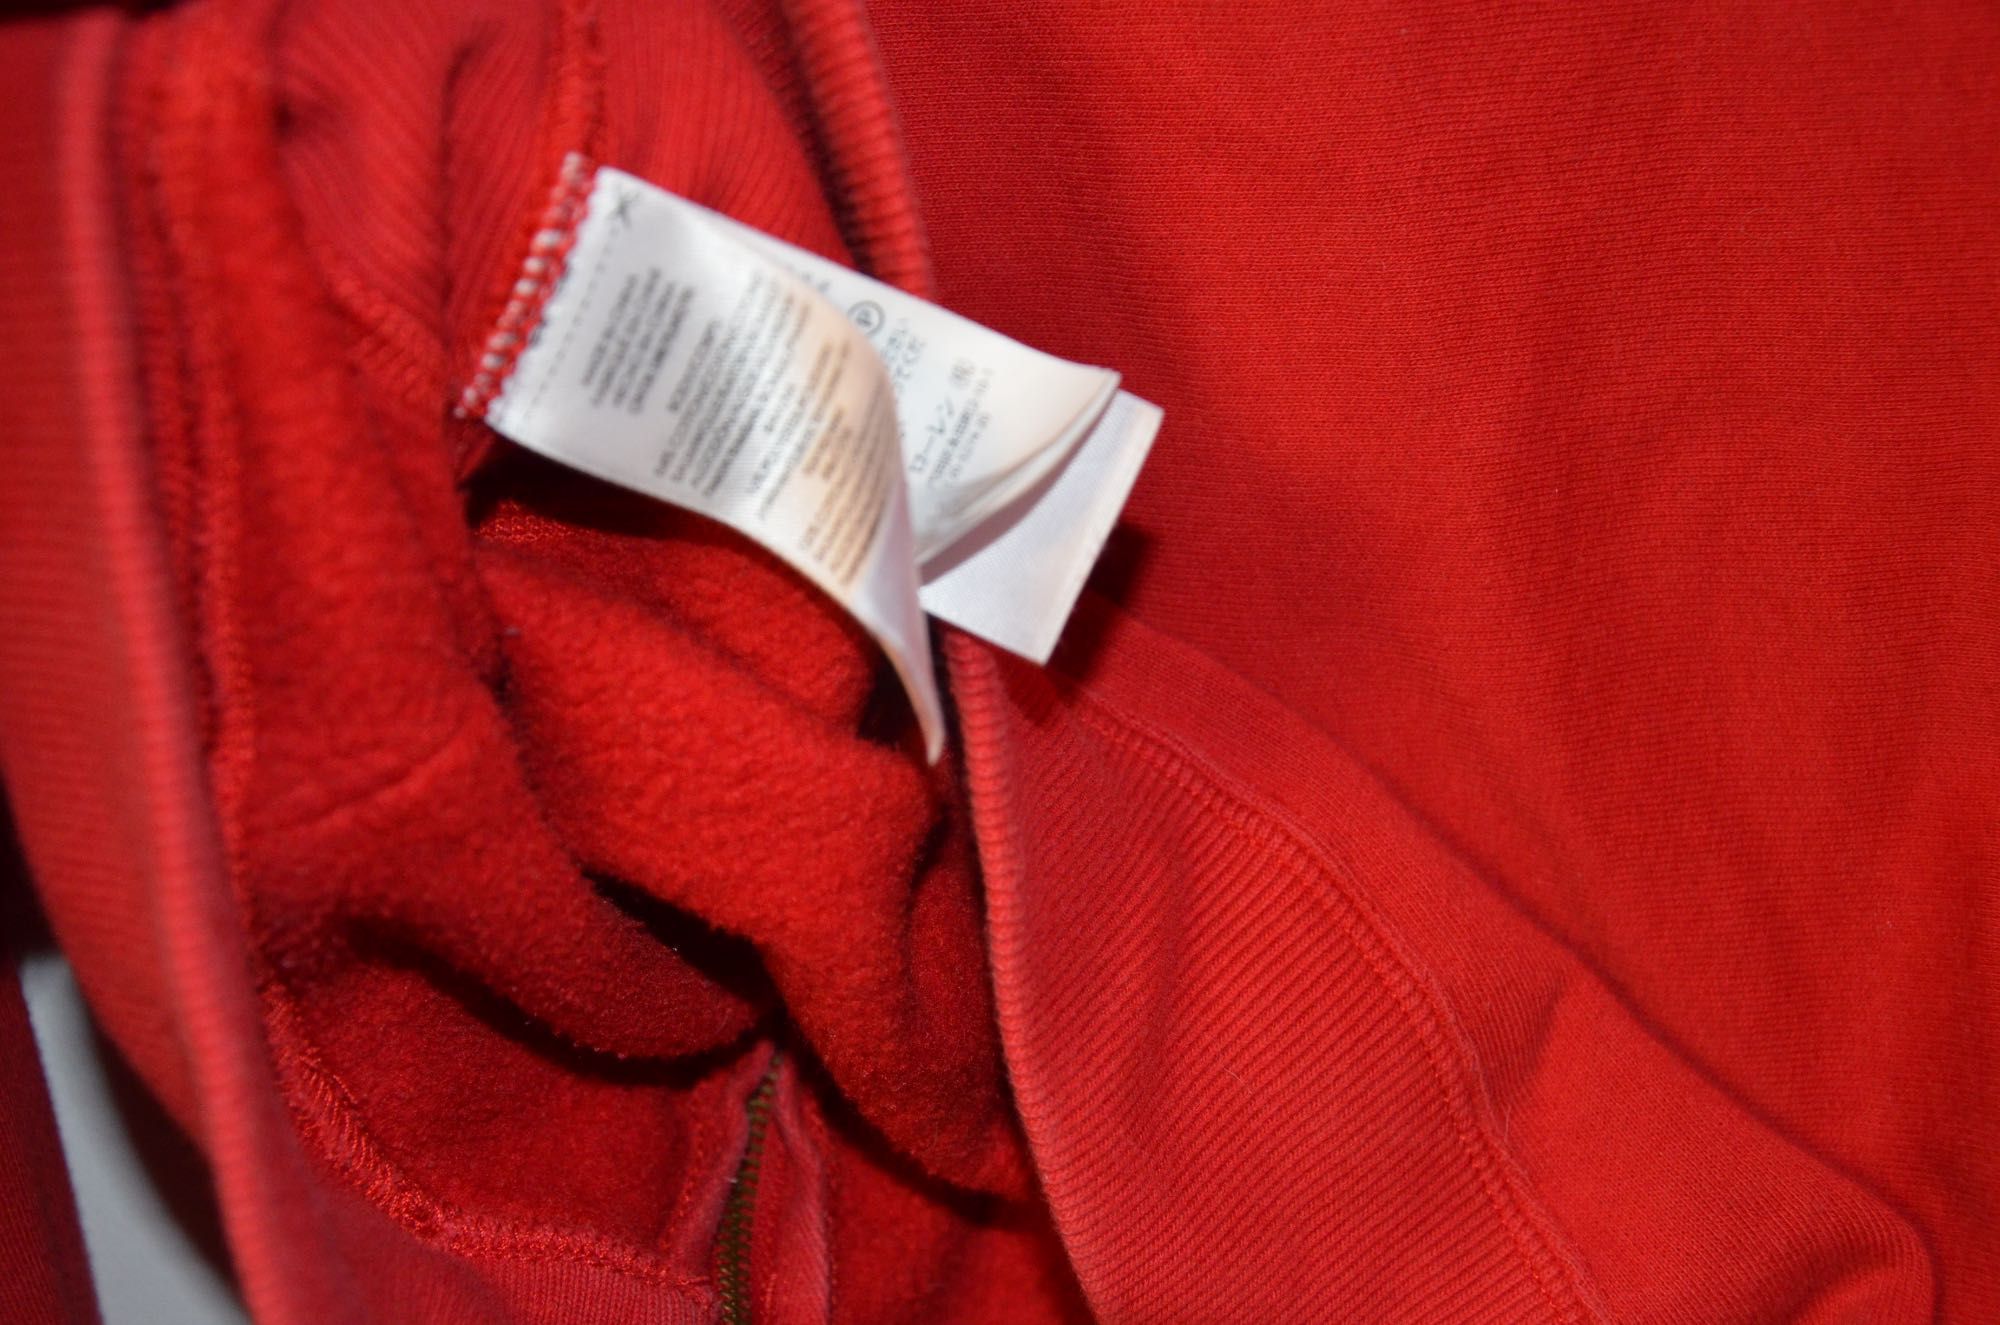 bluza Polo Ralph Lauren czerwona L/ (46/48)